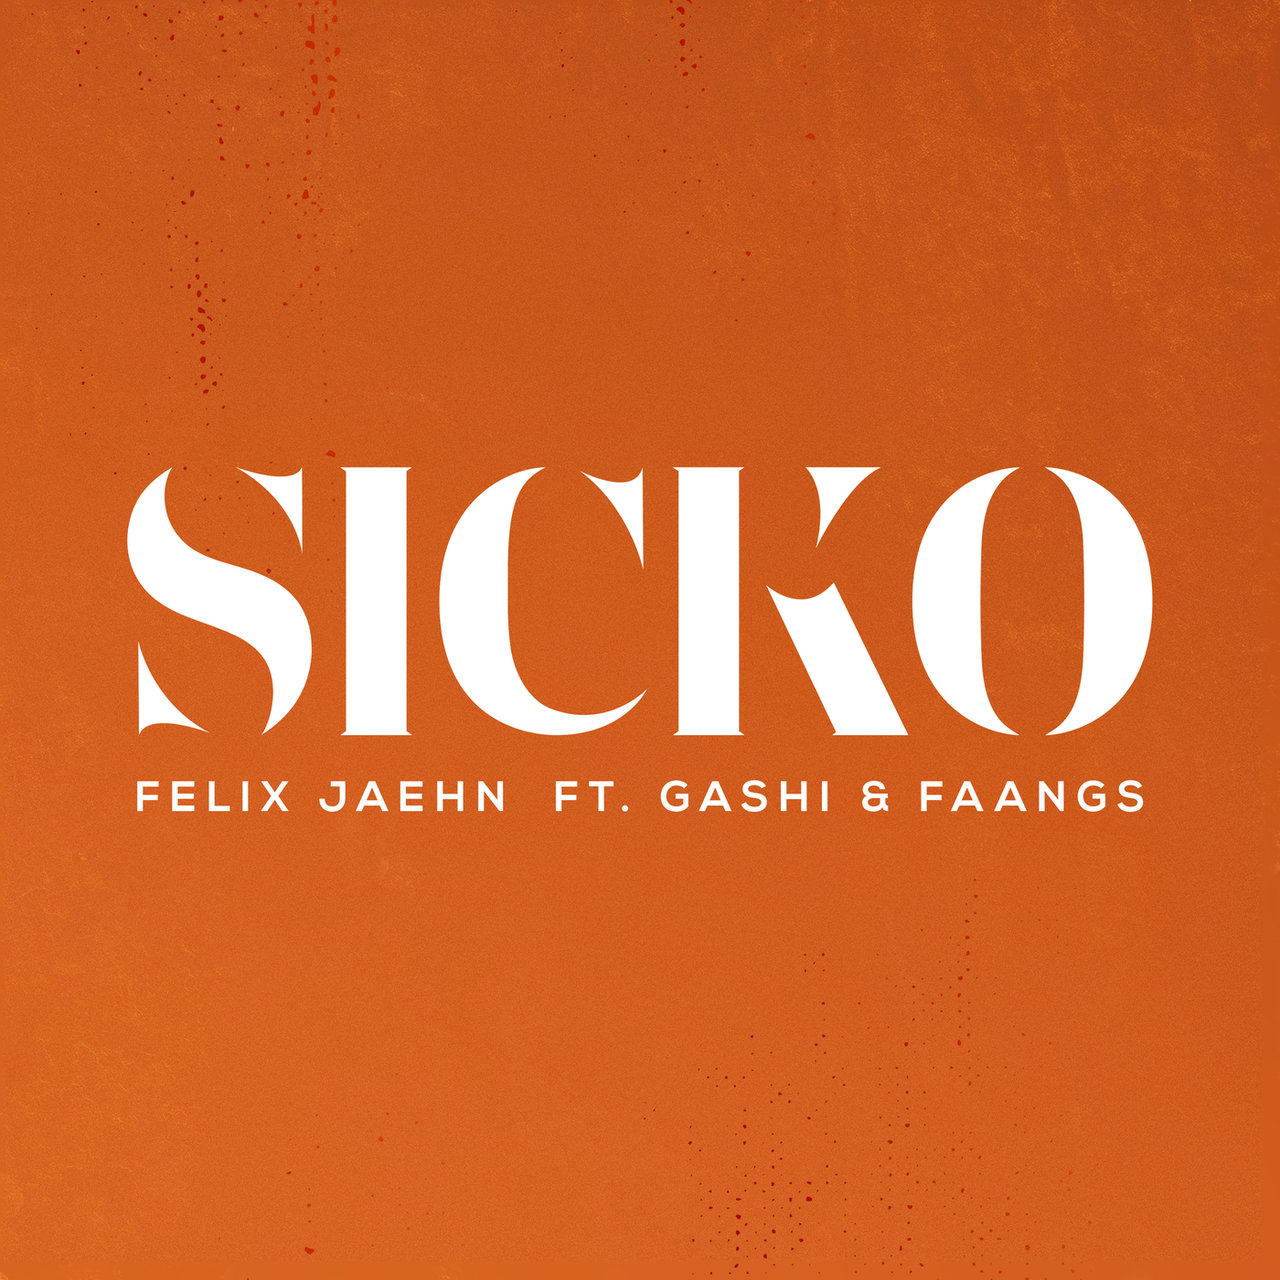 Felix Jaehn featuring GASHI & FAANGS — SICKO cover artwork